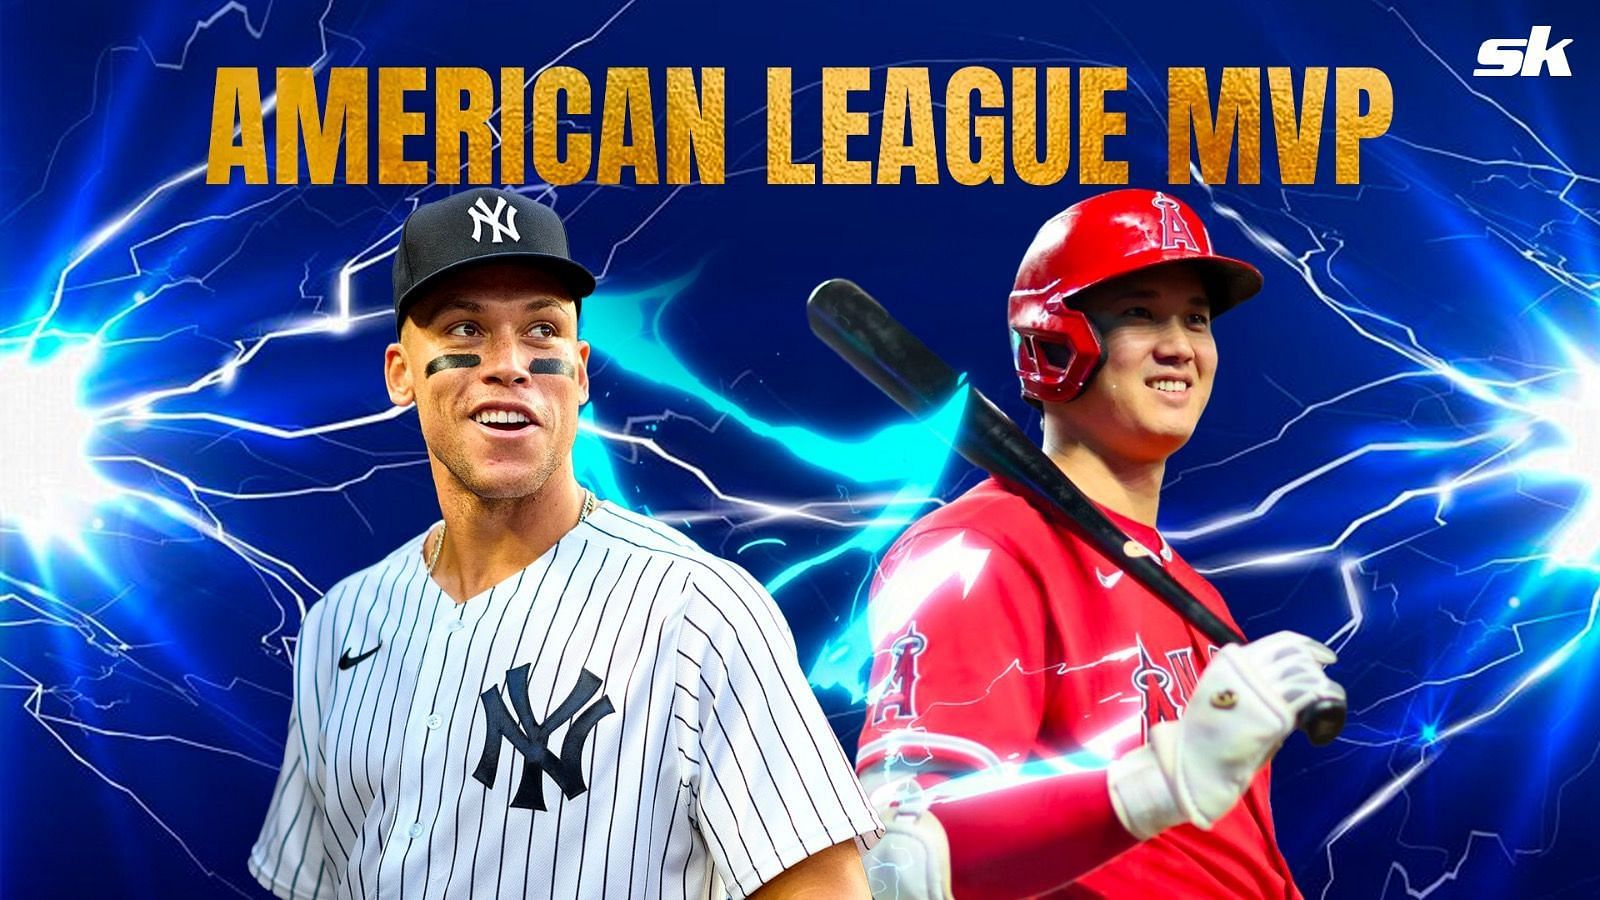 Yankees' slugger Aaron Judge wins American League MVP